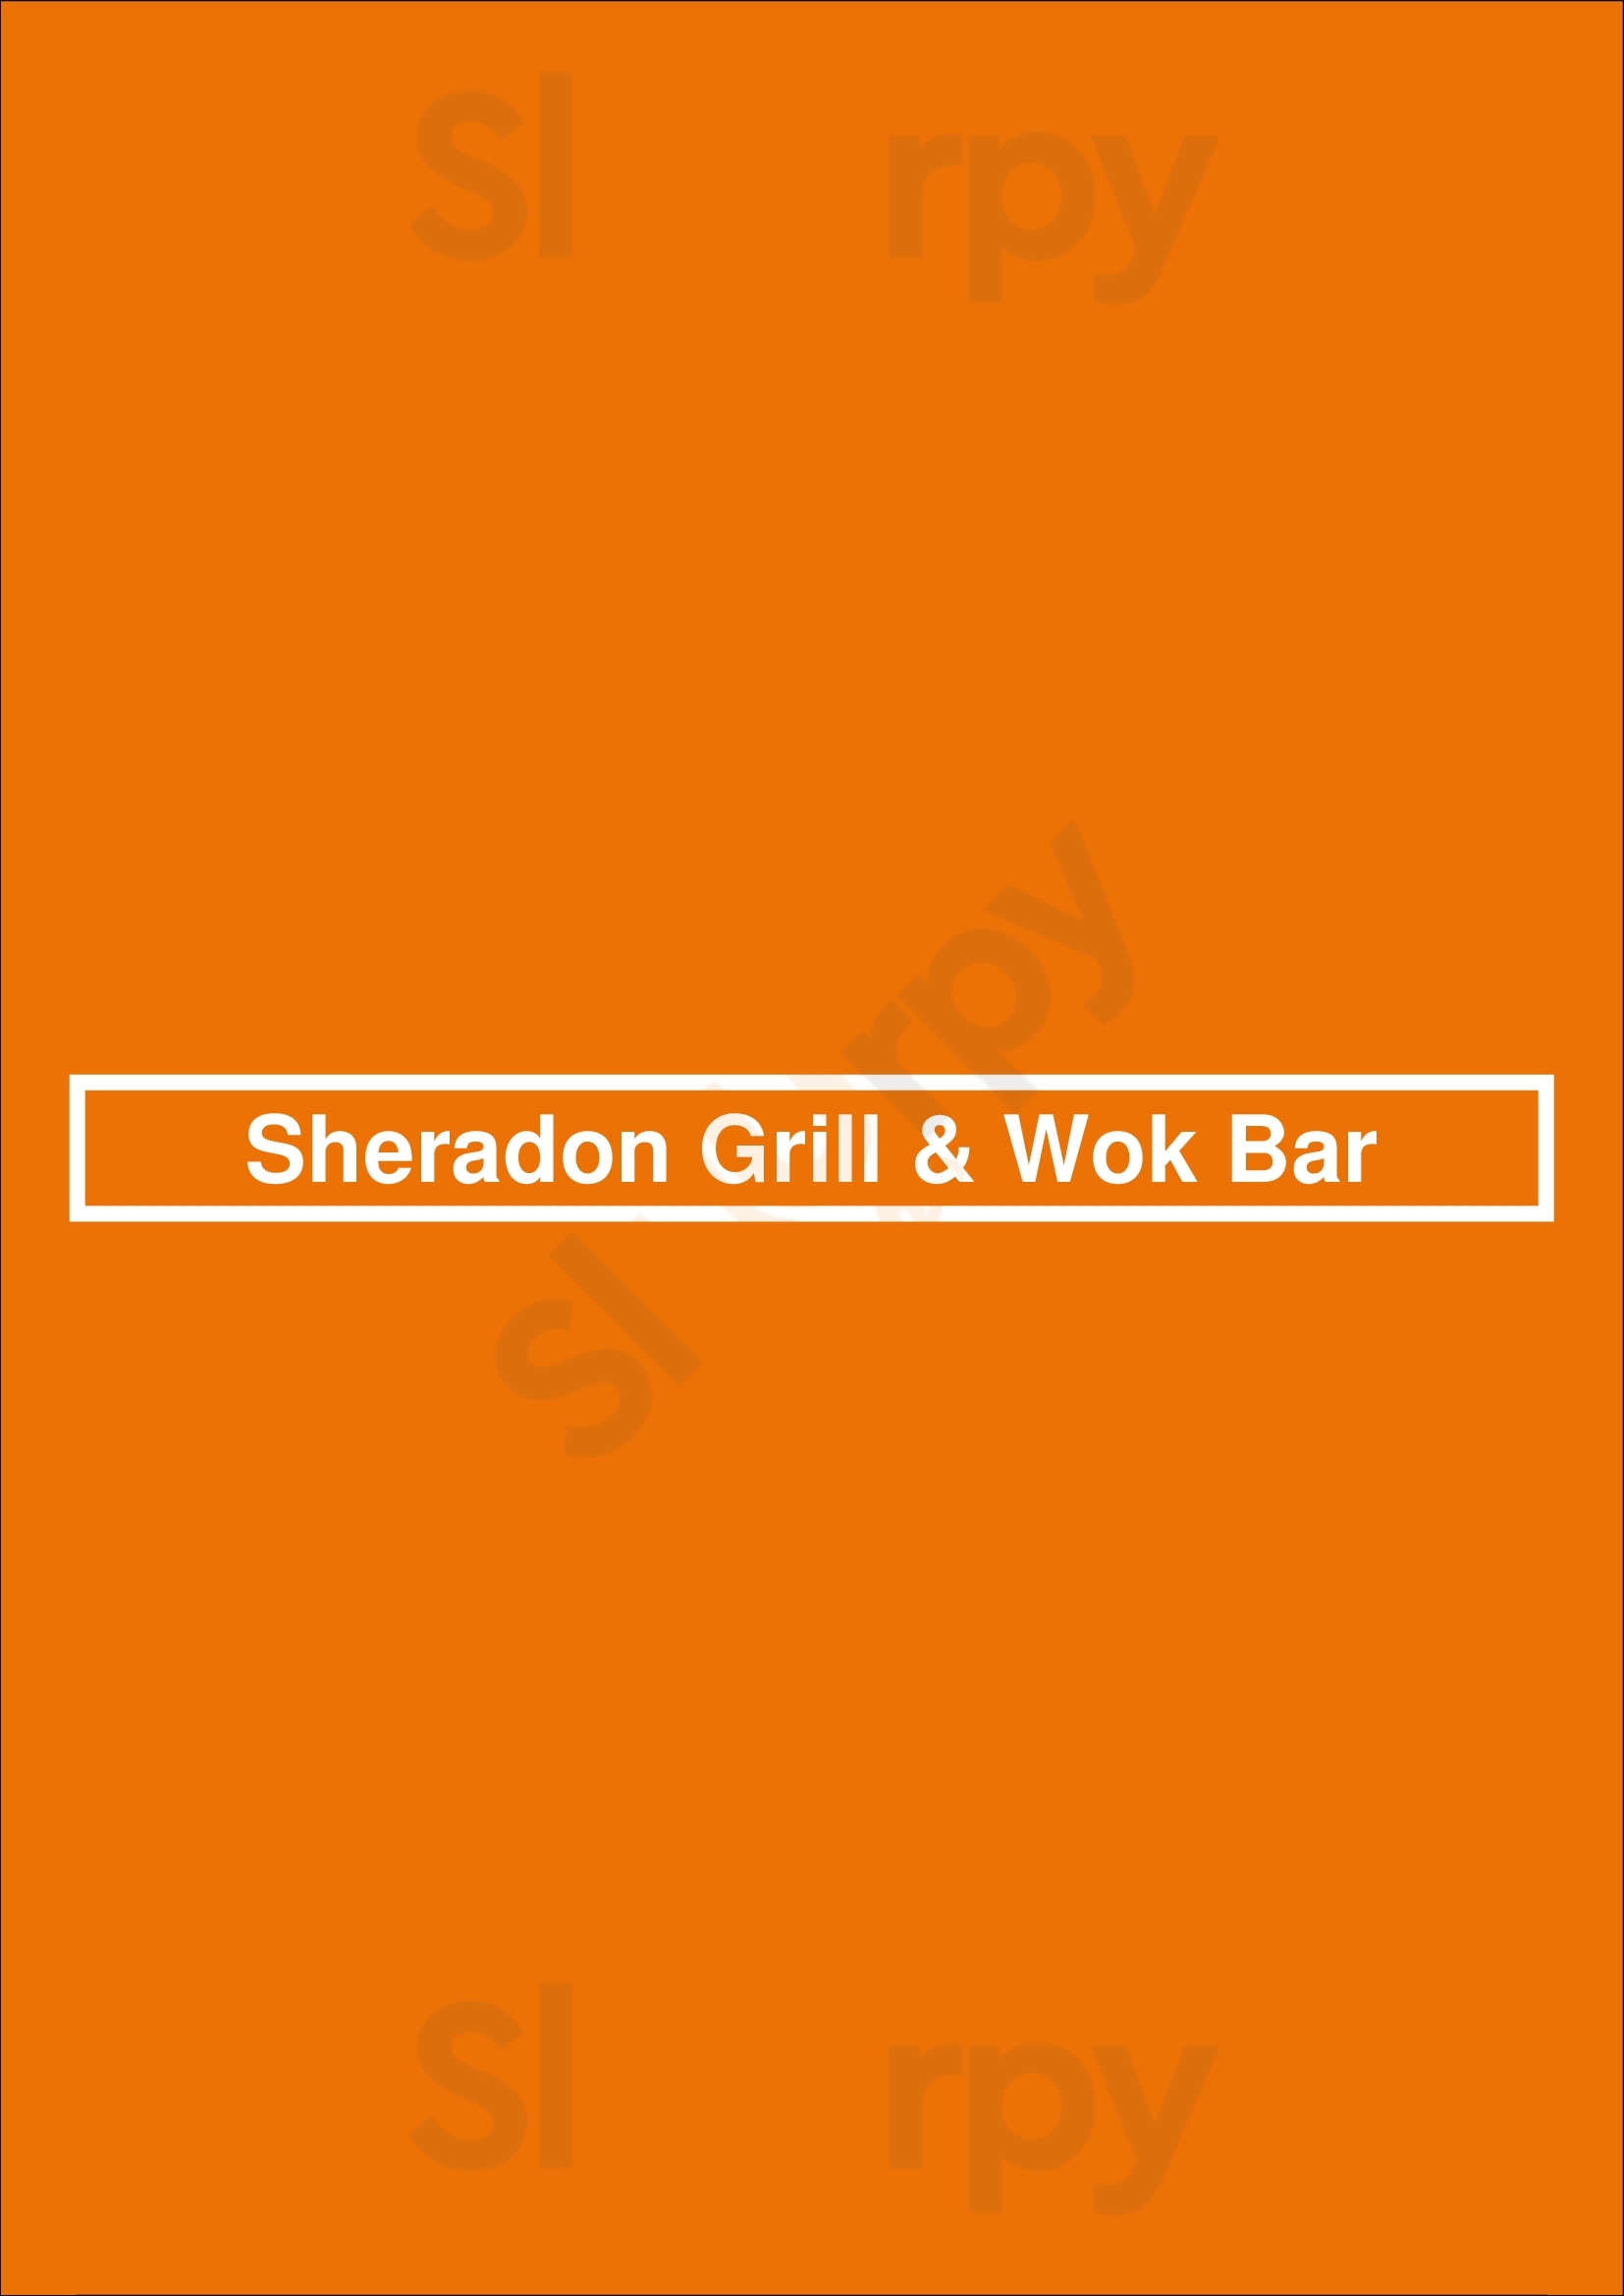 Sheradon Grill & Wok Bar Chester Menu - 1